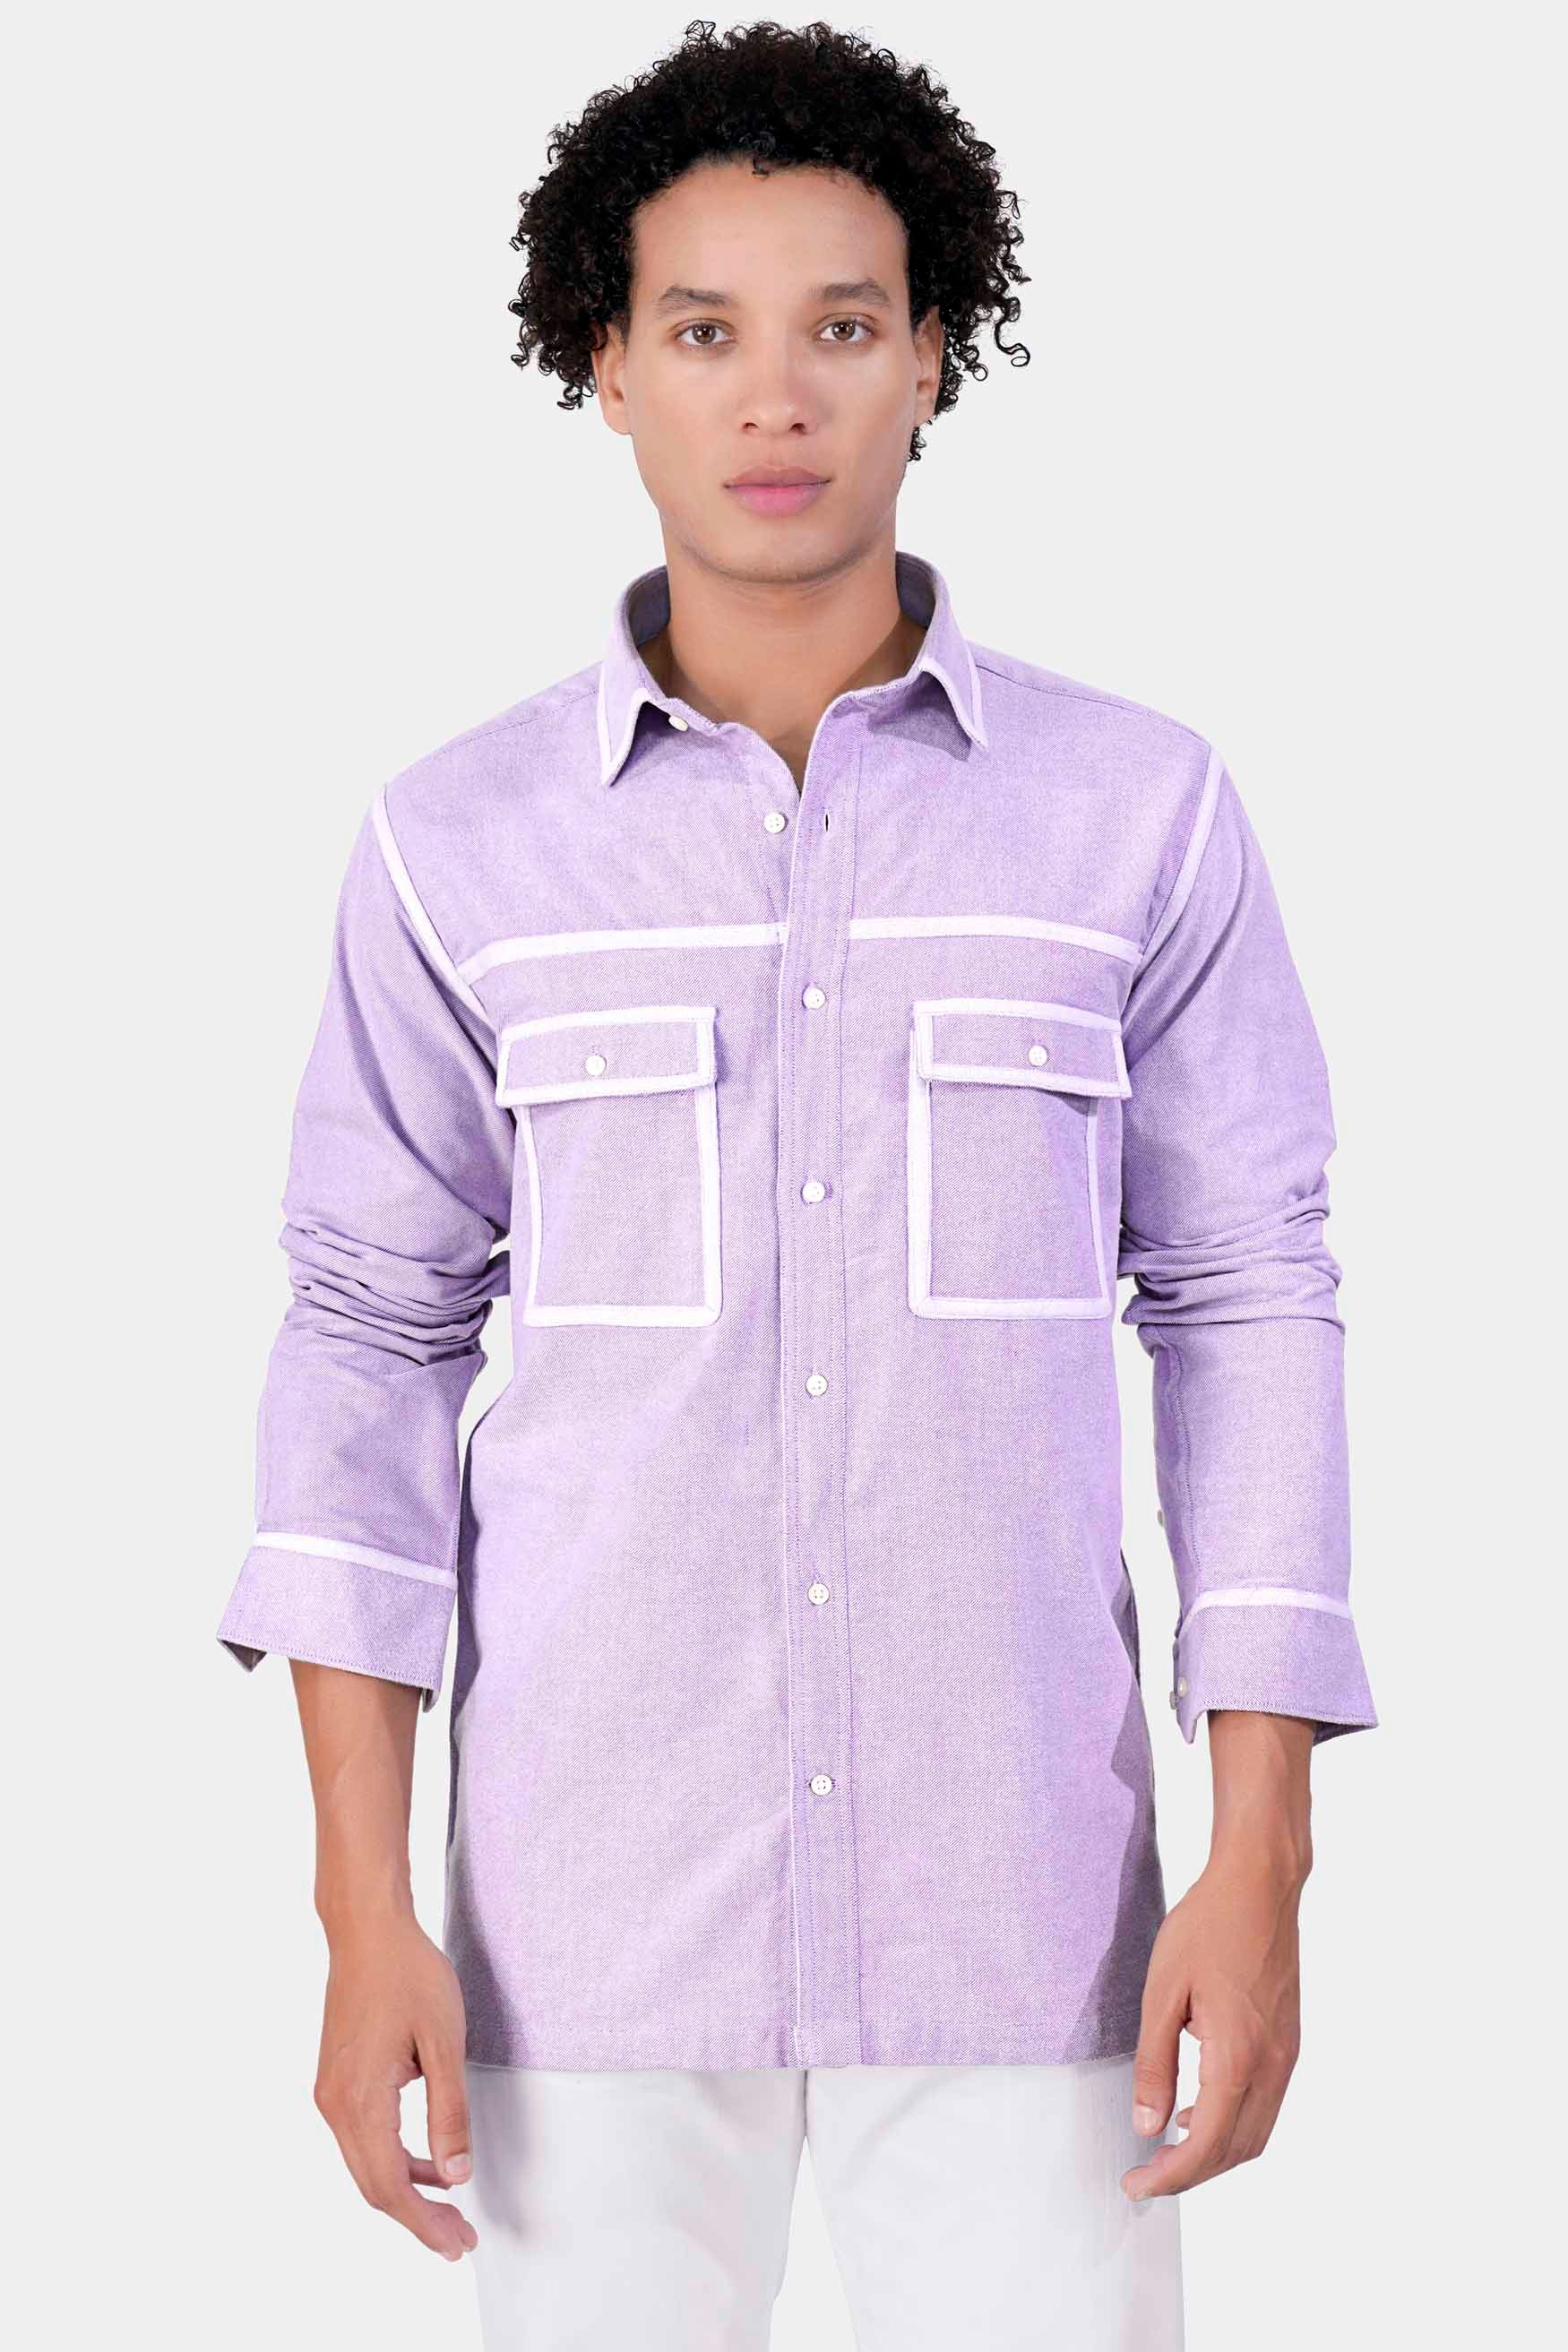 Wisteria Purple with White Border Flannel Shirt